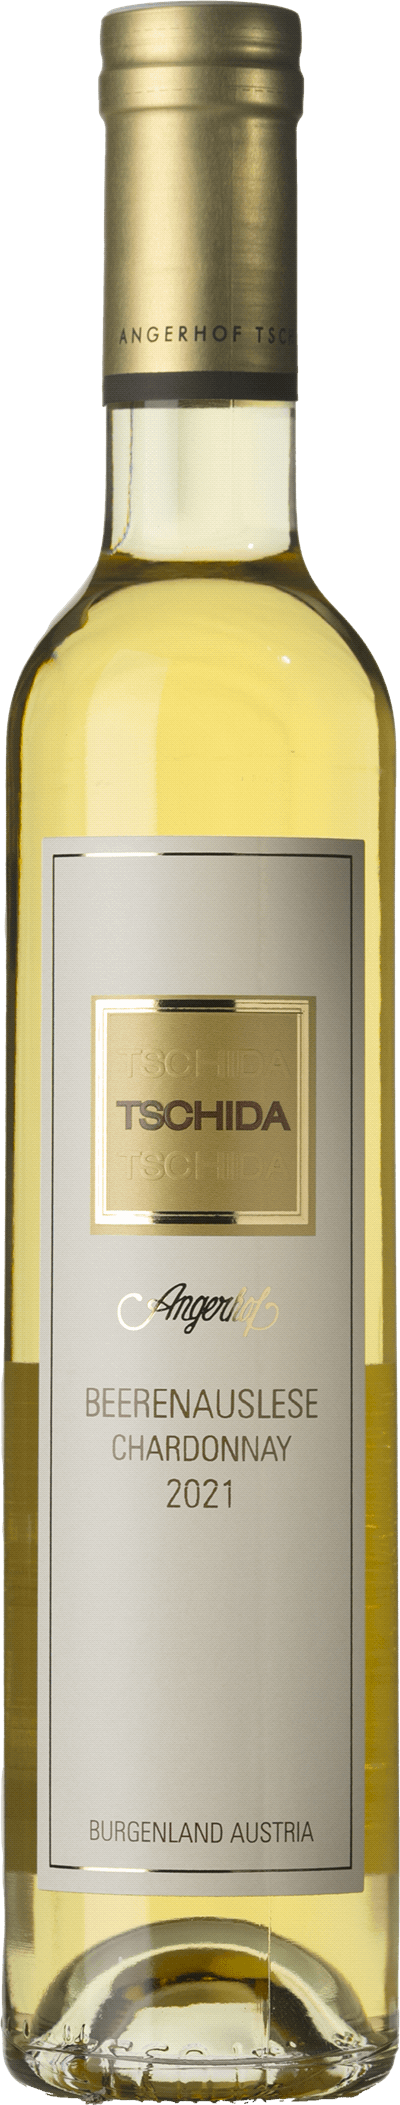 Tschida Chardonnay Beerenauslese